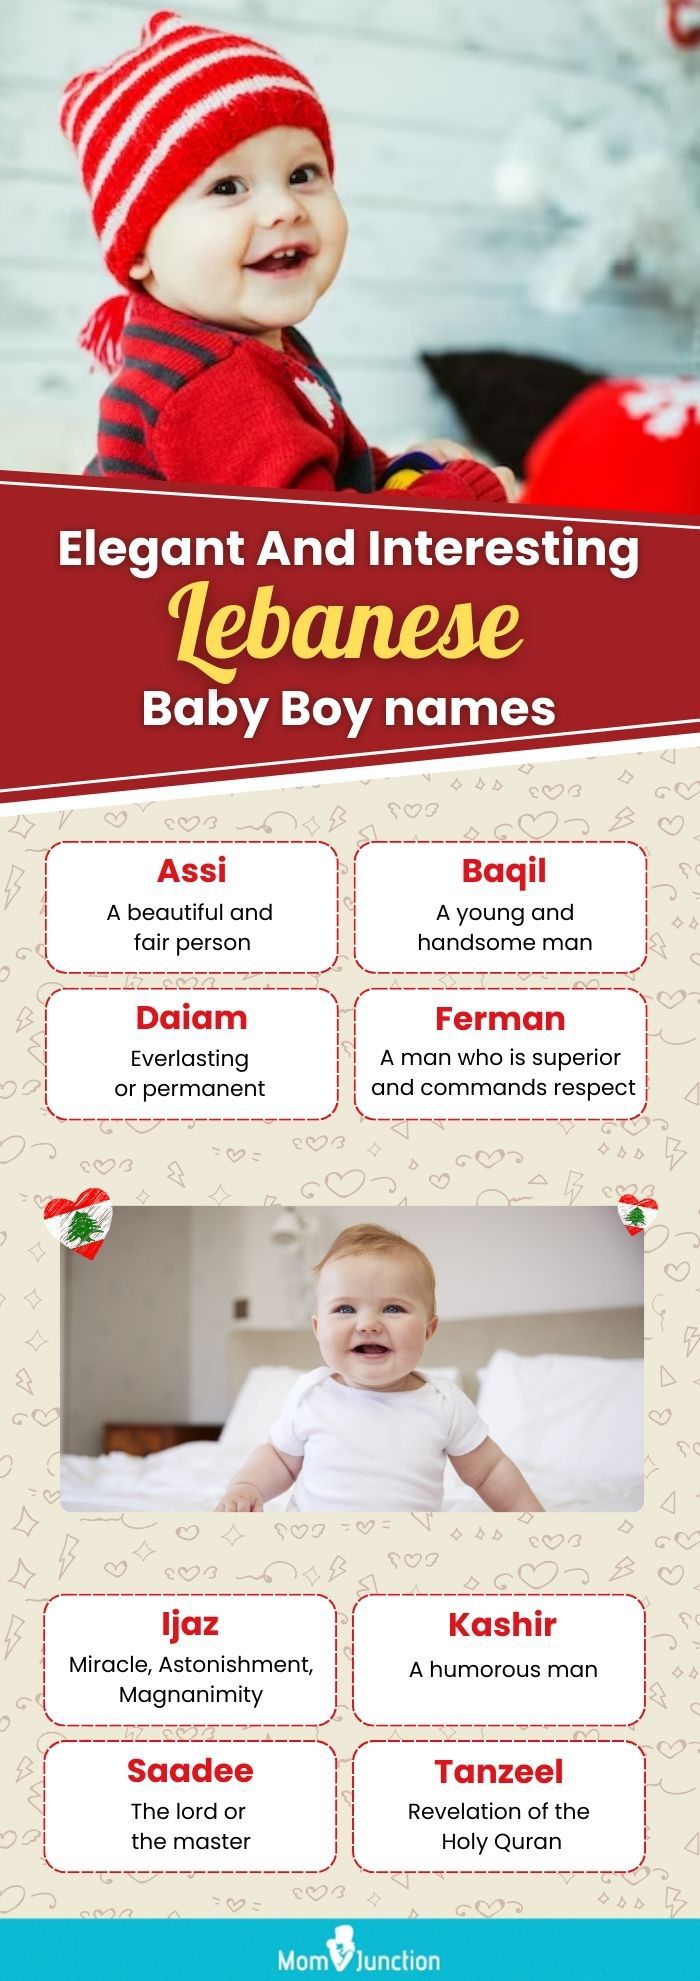 elegant and interesting lebanese baby boy names (infographic)